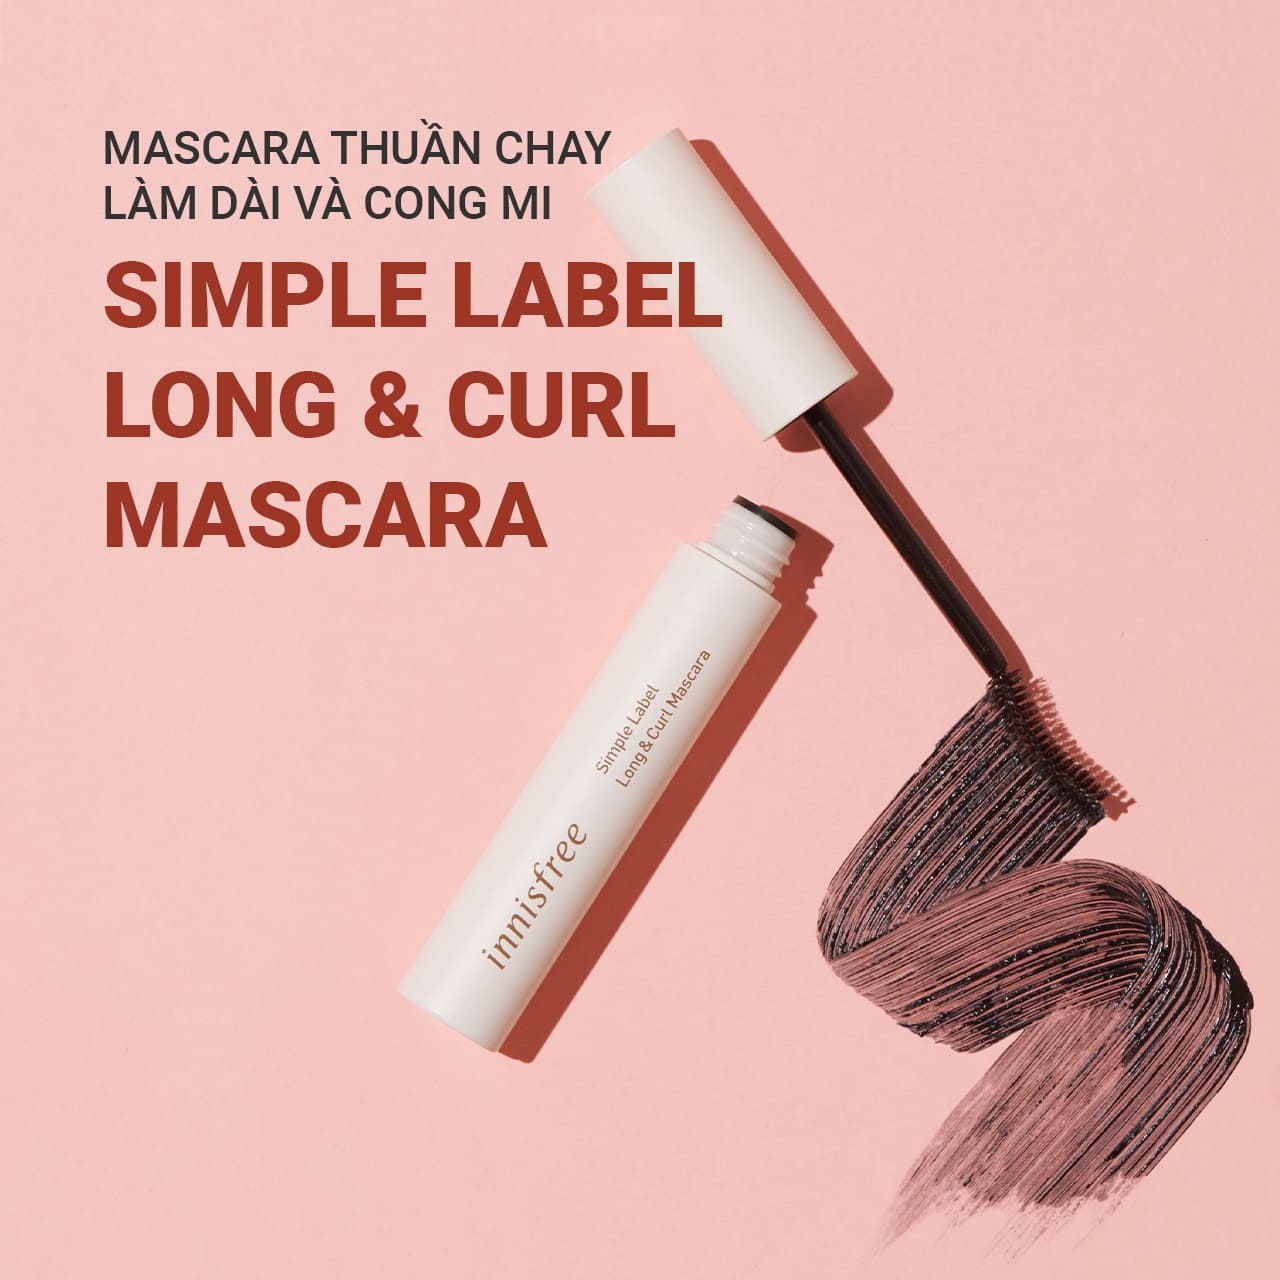 Mascara Innisfree Simple Label Long & Curl Mascara làm dài và cong mi 7.5g